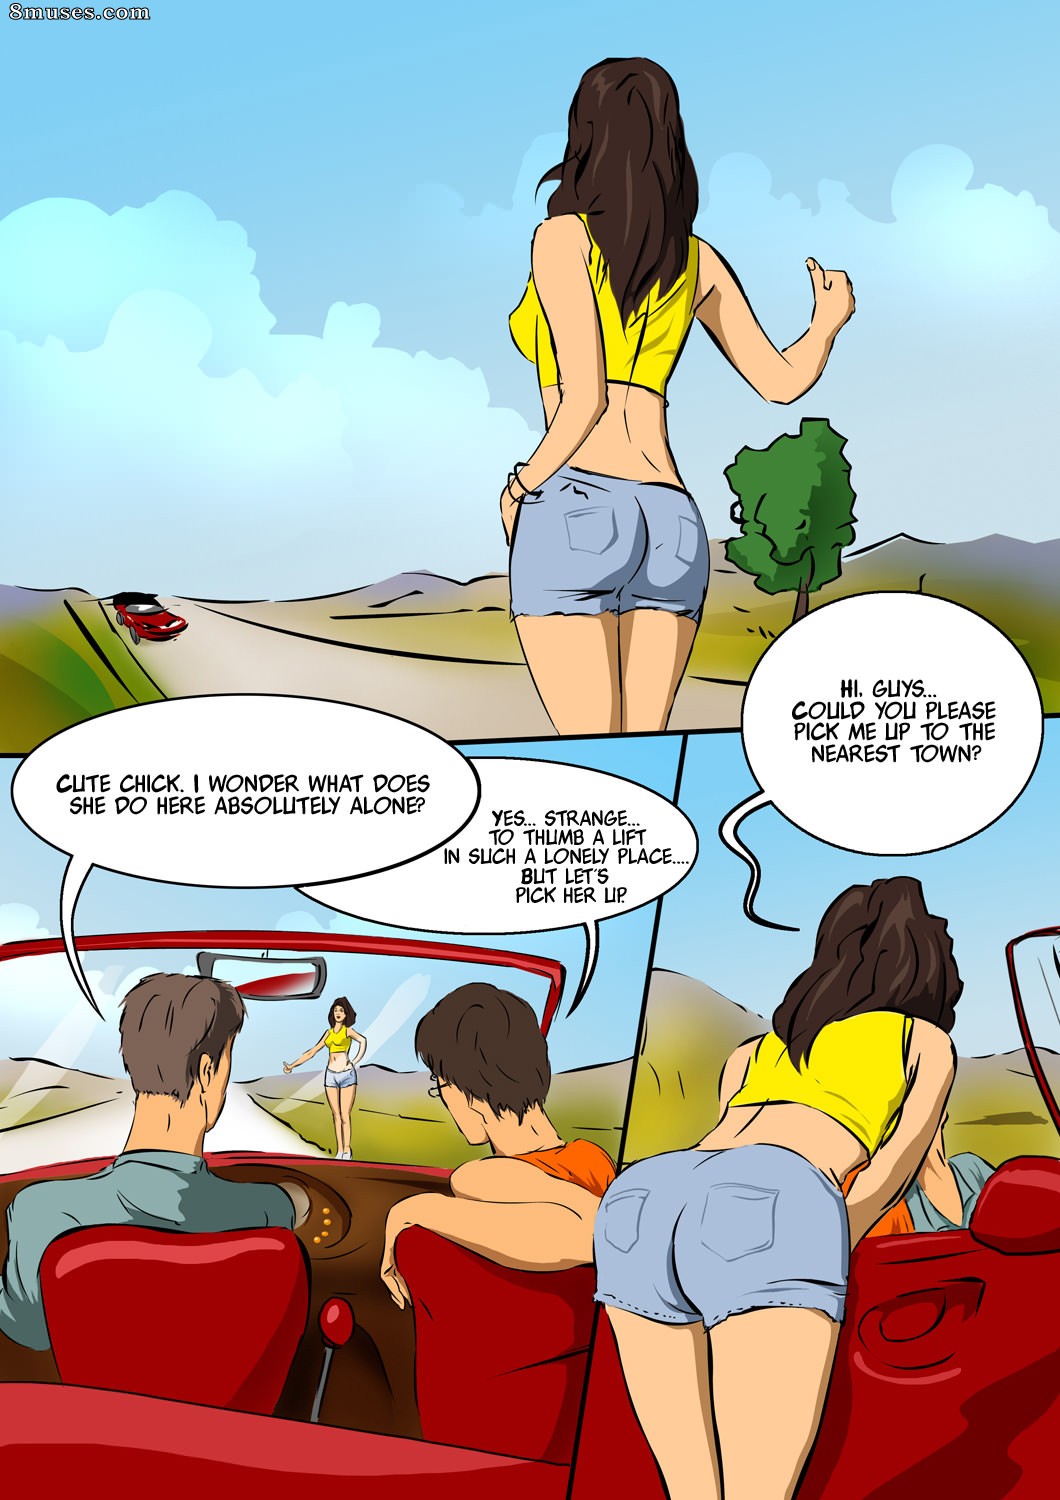 Hitchhiking porn comic